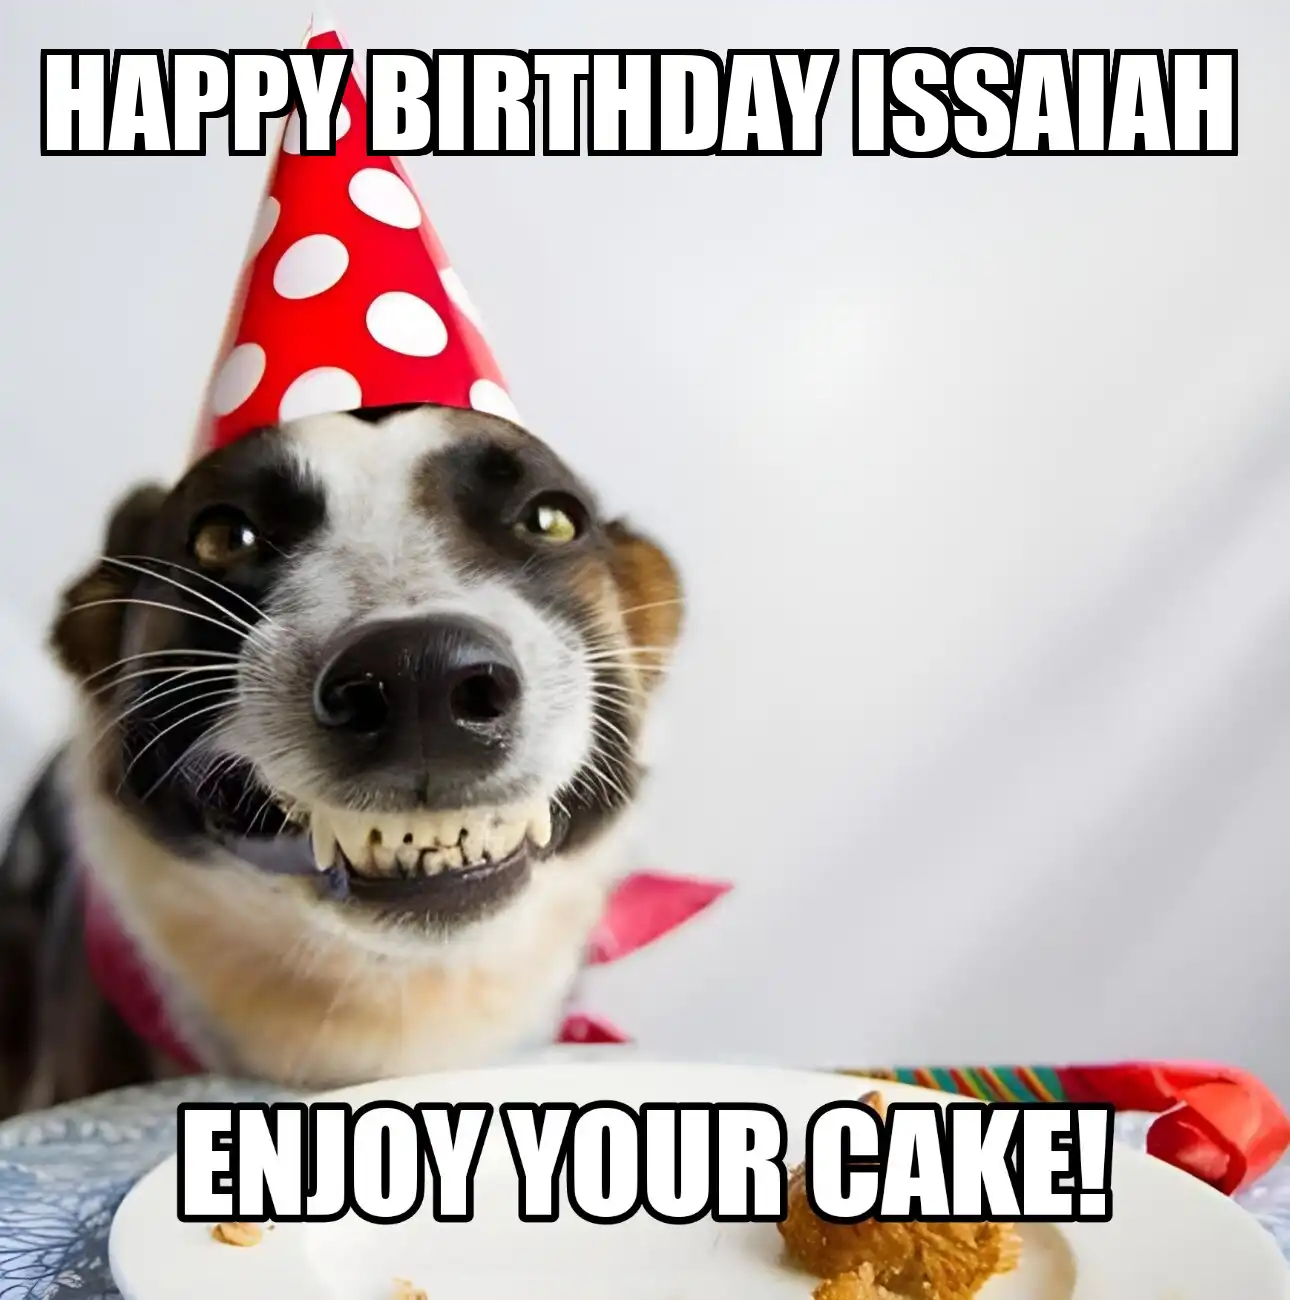 Happy Birthday Issaiah Enjoy Your Cake Dog Meme